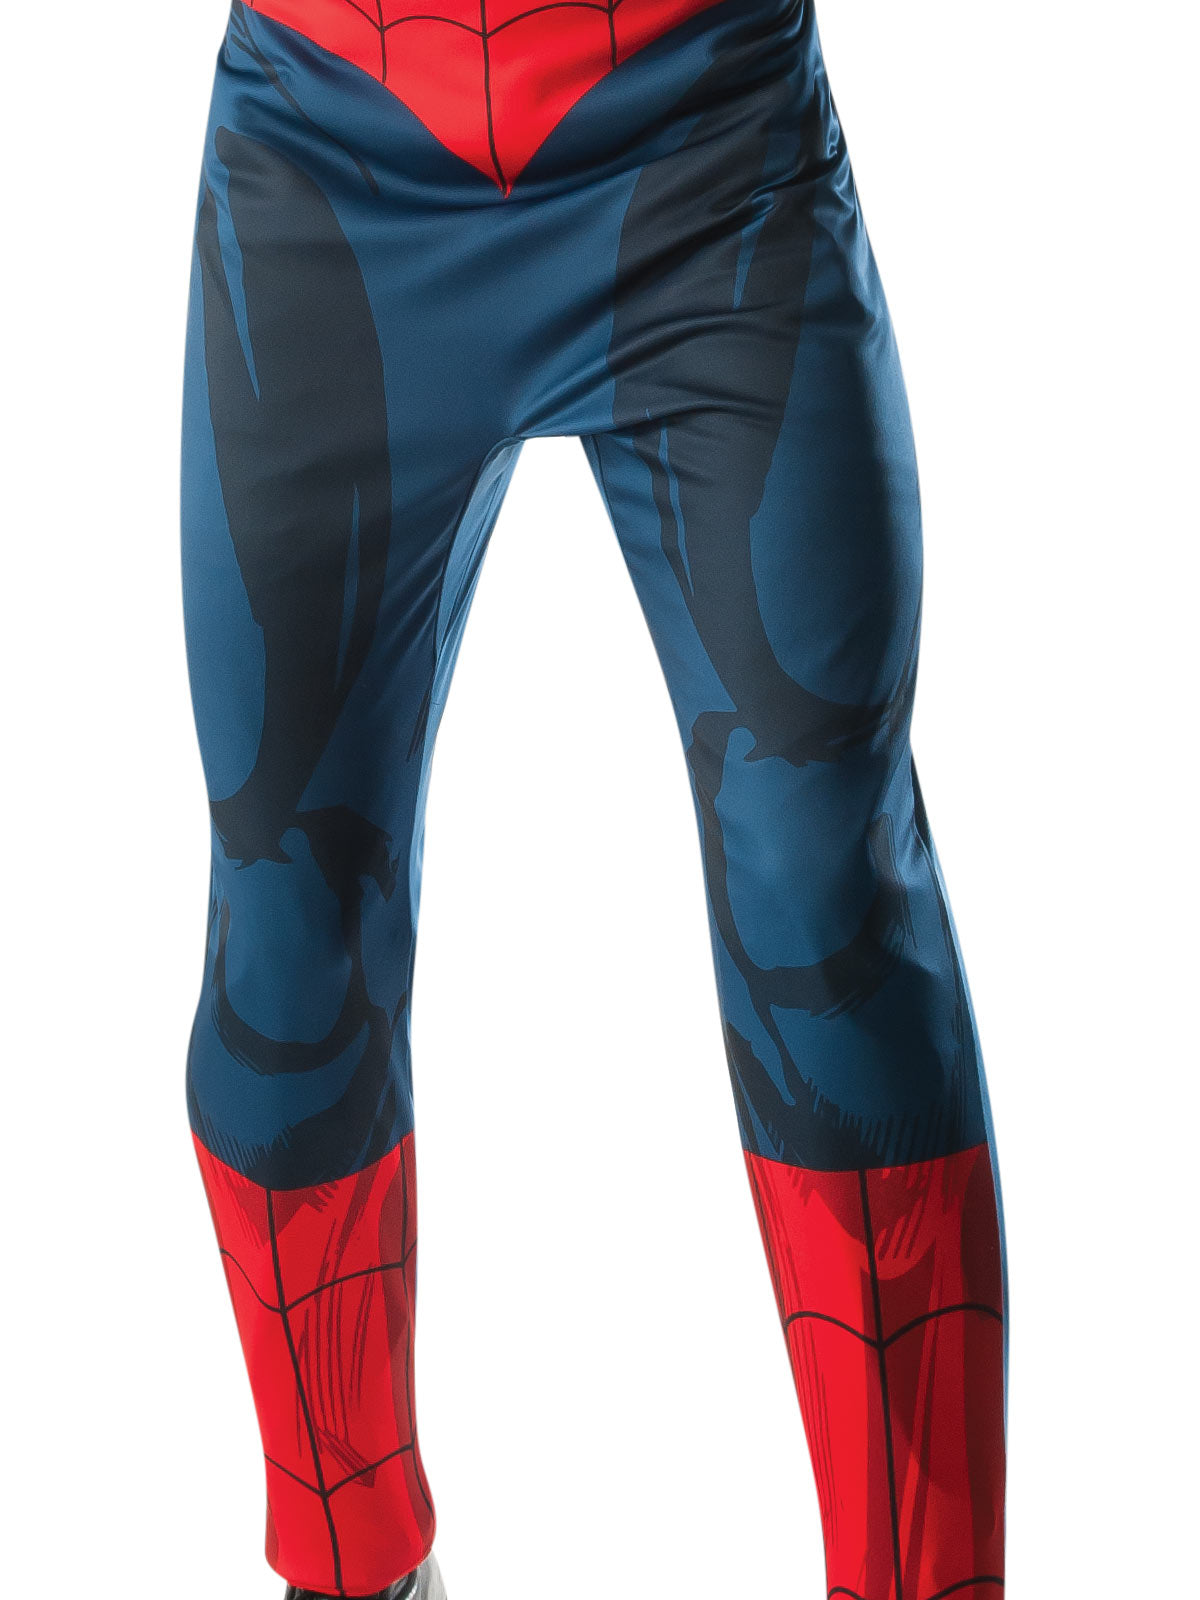 Spider Man Adult Costume